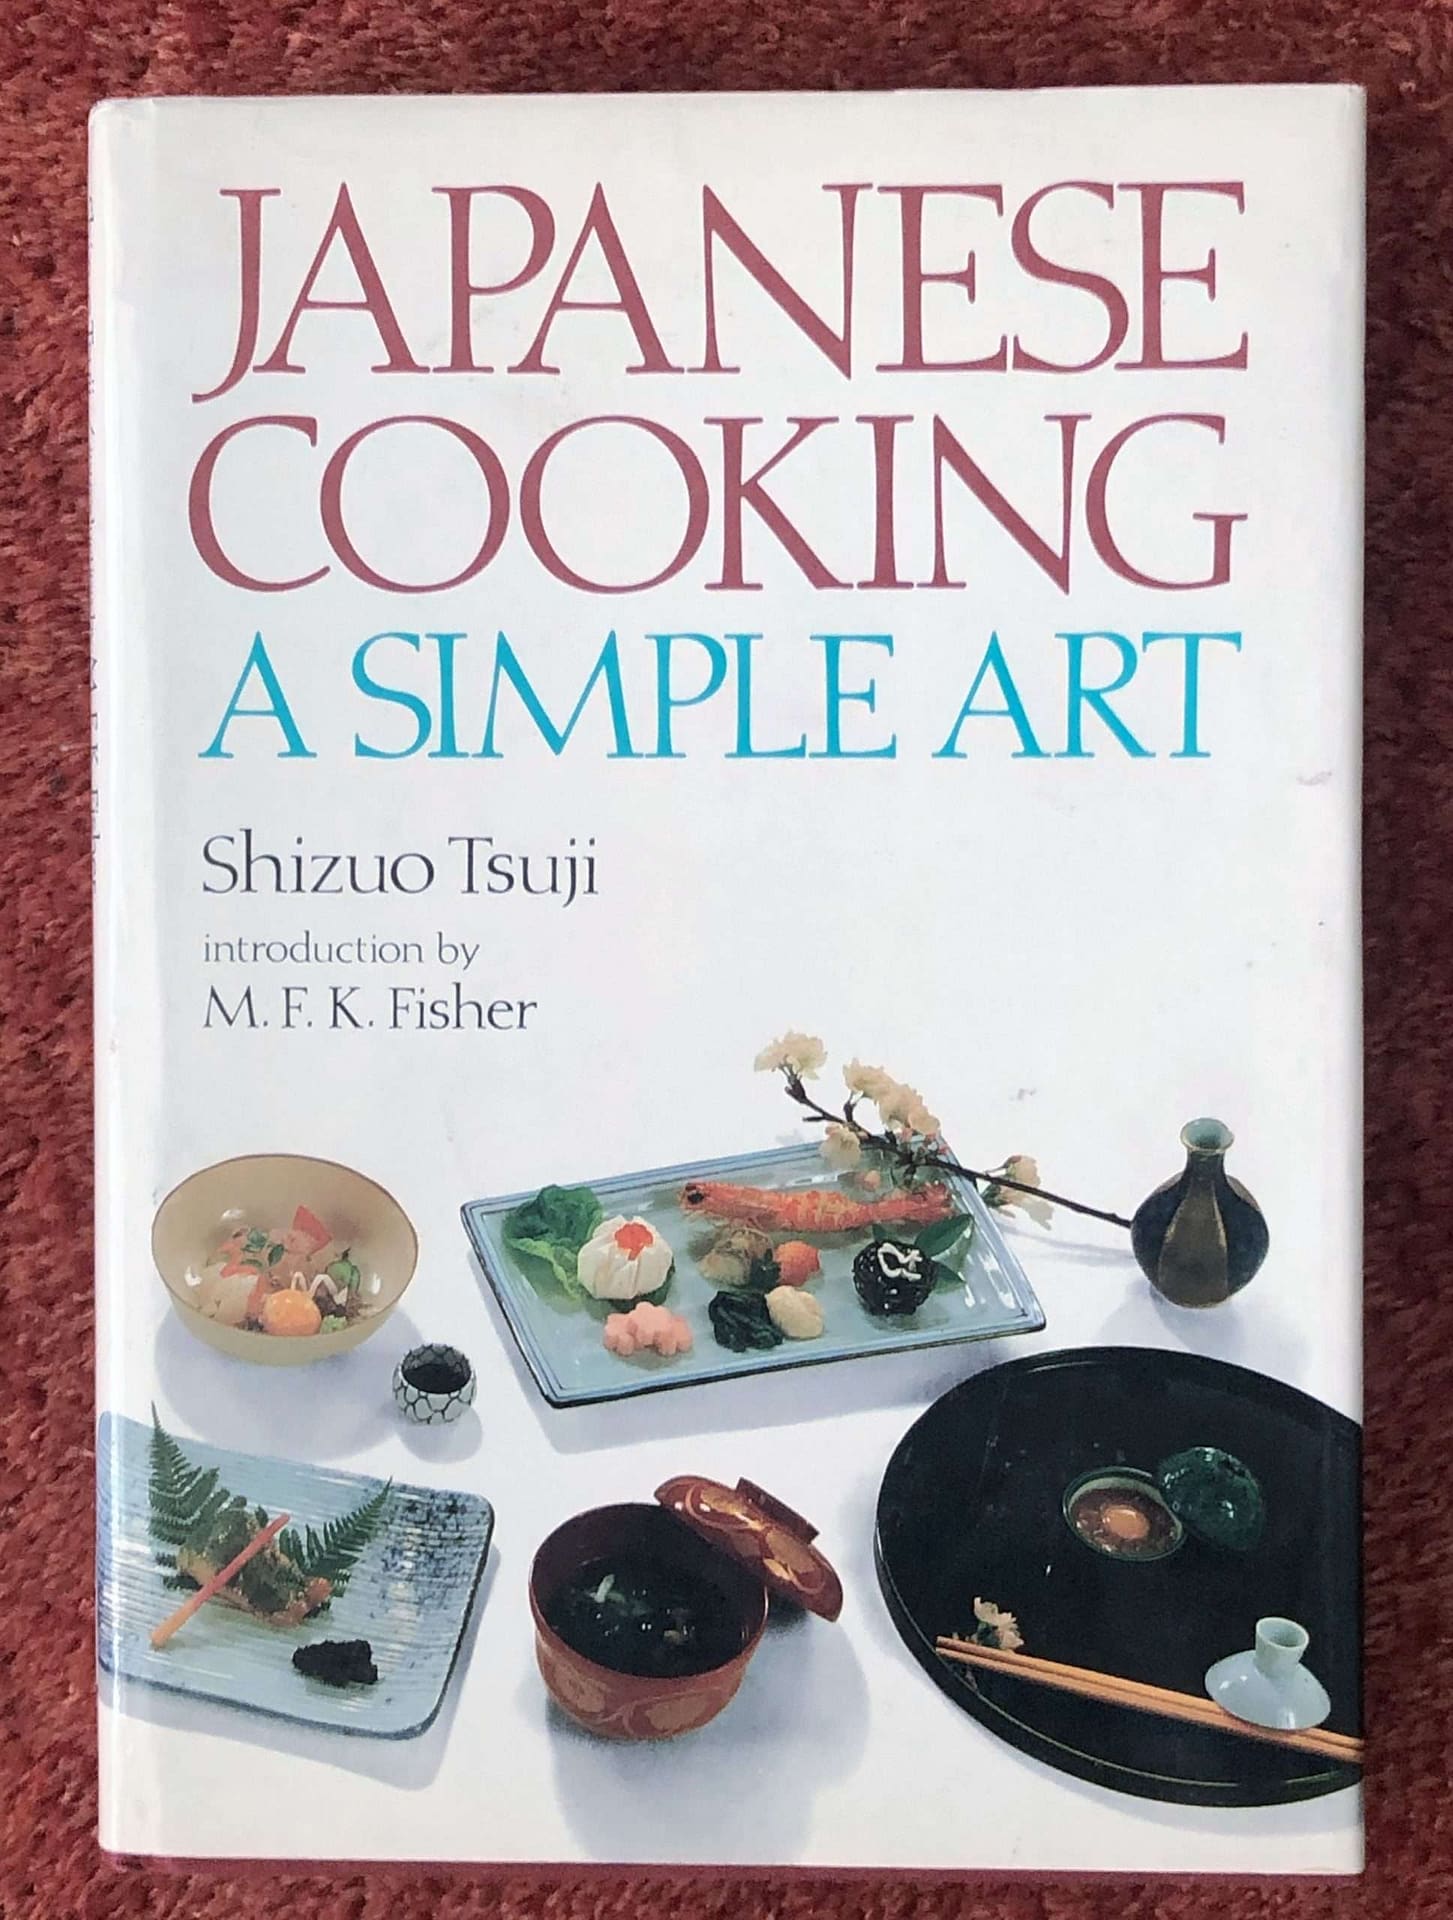 Japanese Cooking: A Simple Art by Shizuo Tsuji